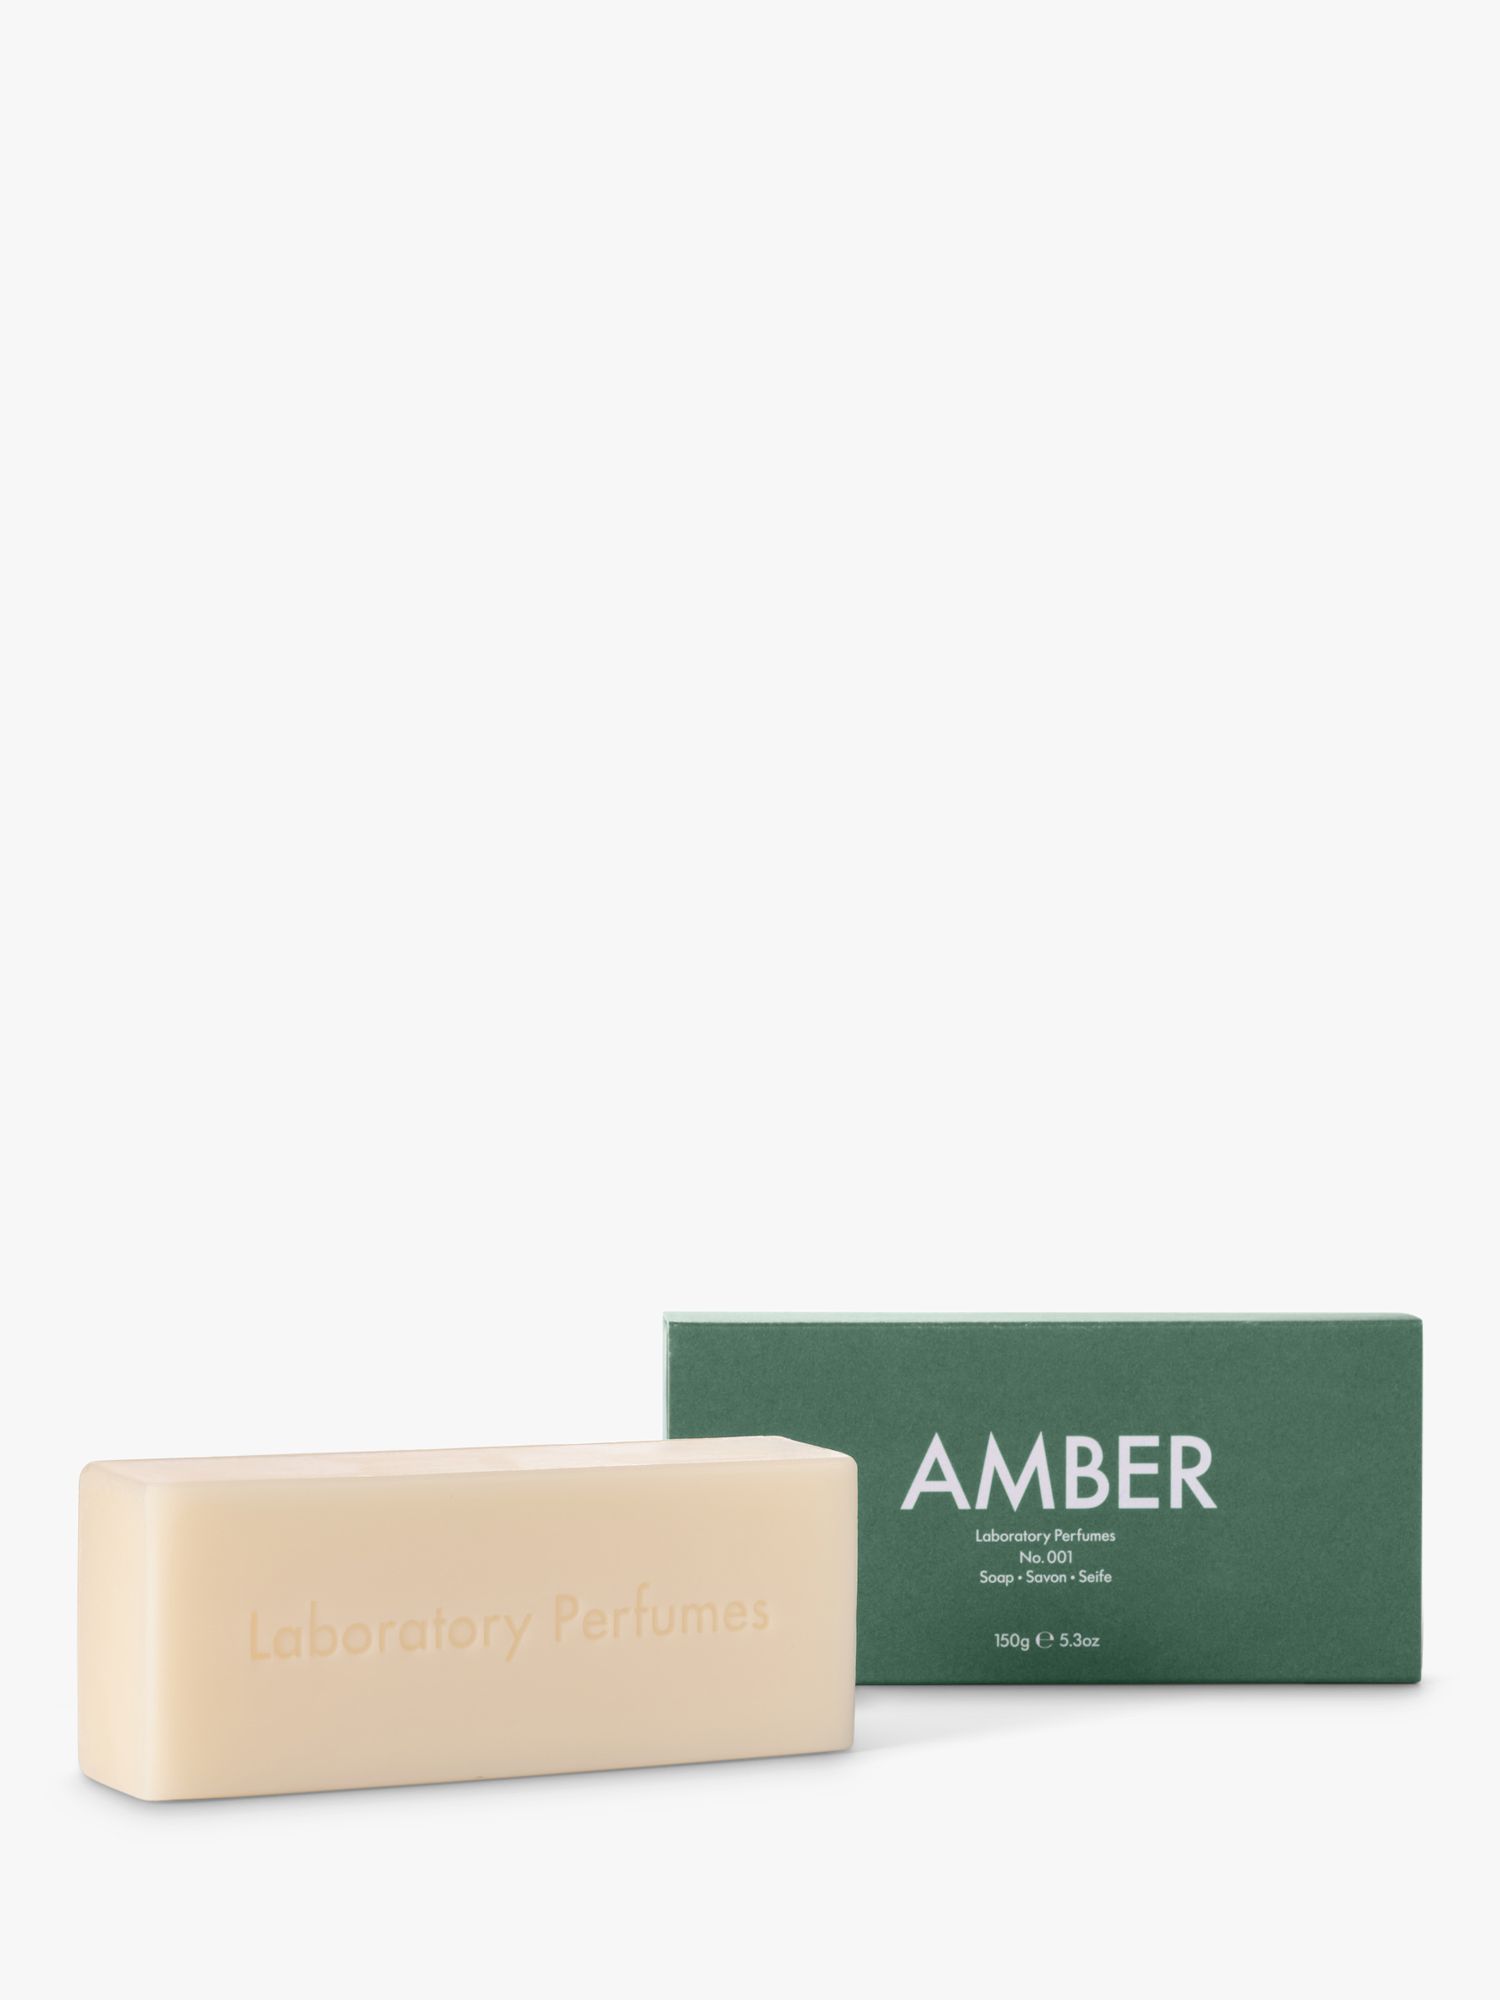 Laboratory Perfumes Amber Soap, 150g 1